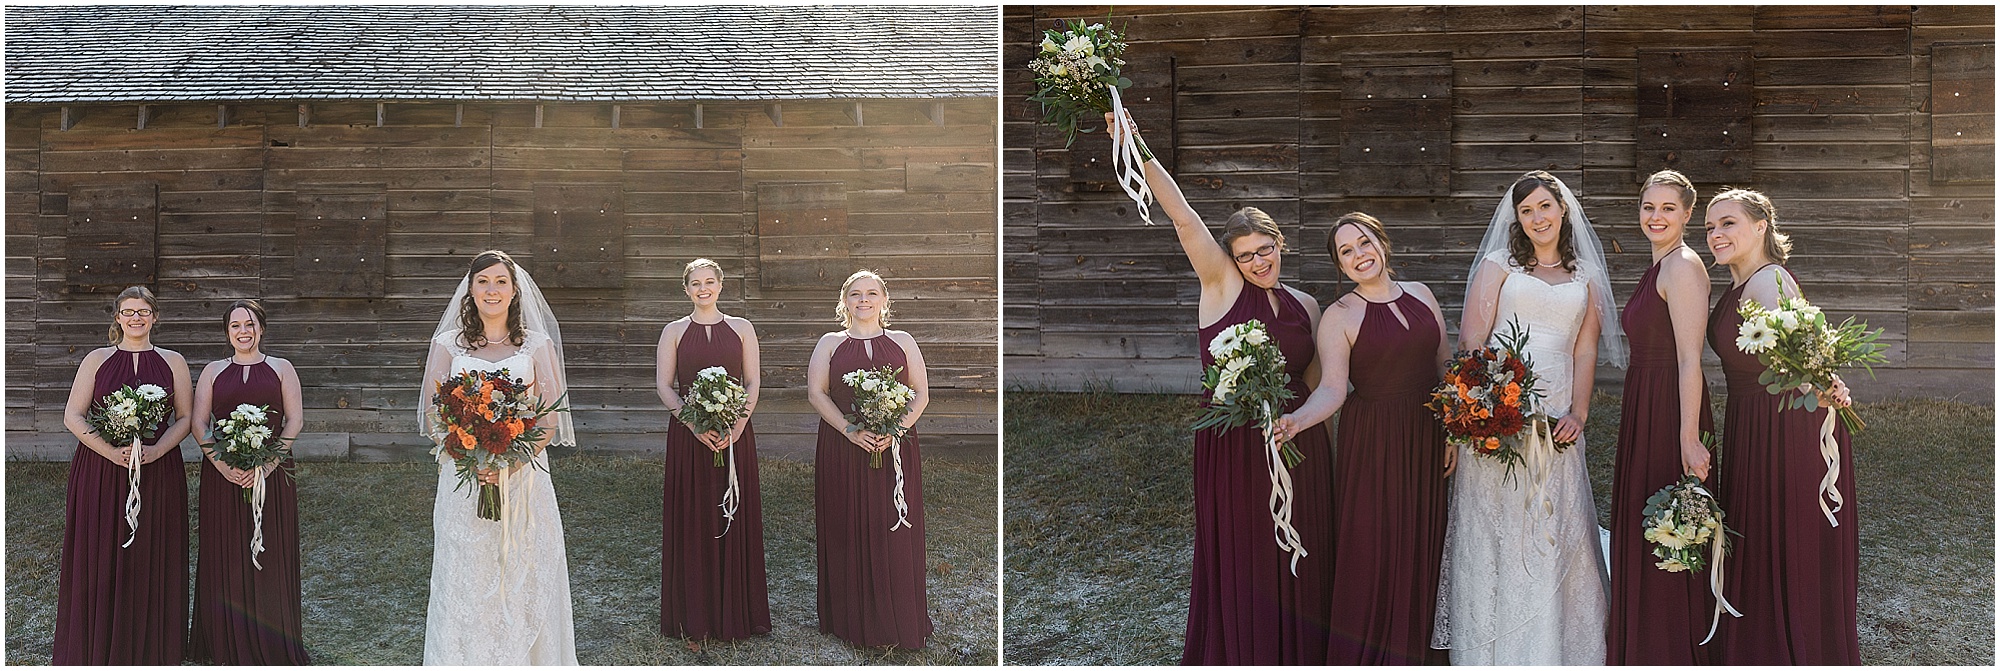 Bridesmaids wearing maroon Bill Levkoff dresses have fun at this Hollinshead Barn Fall wedding in Bend, OR. | Erica Swantek Photography